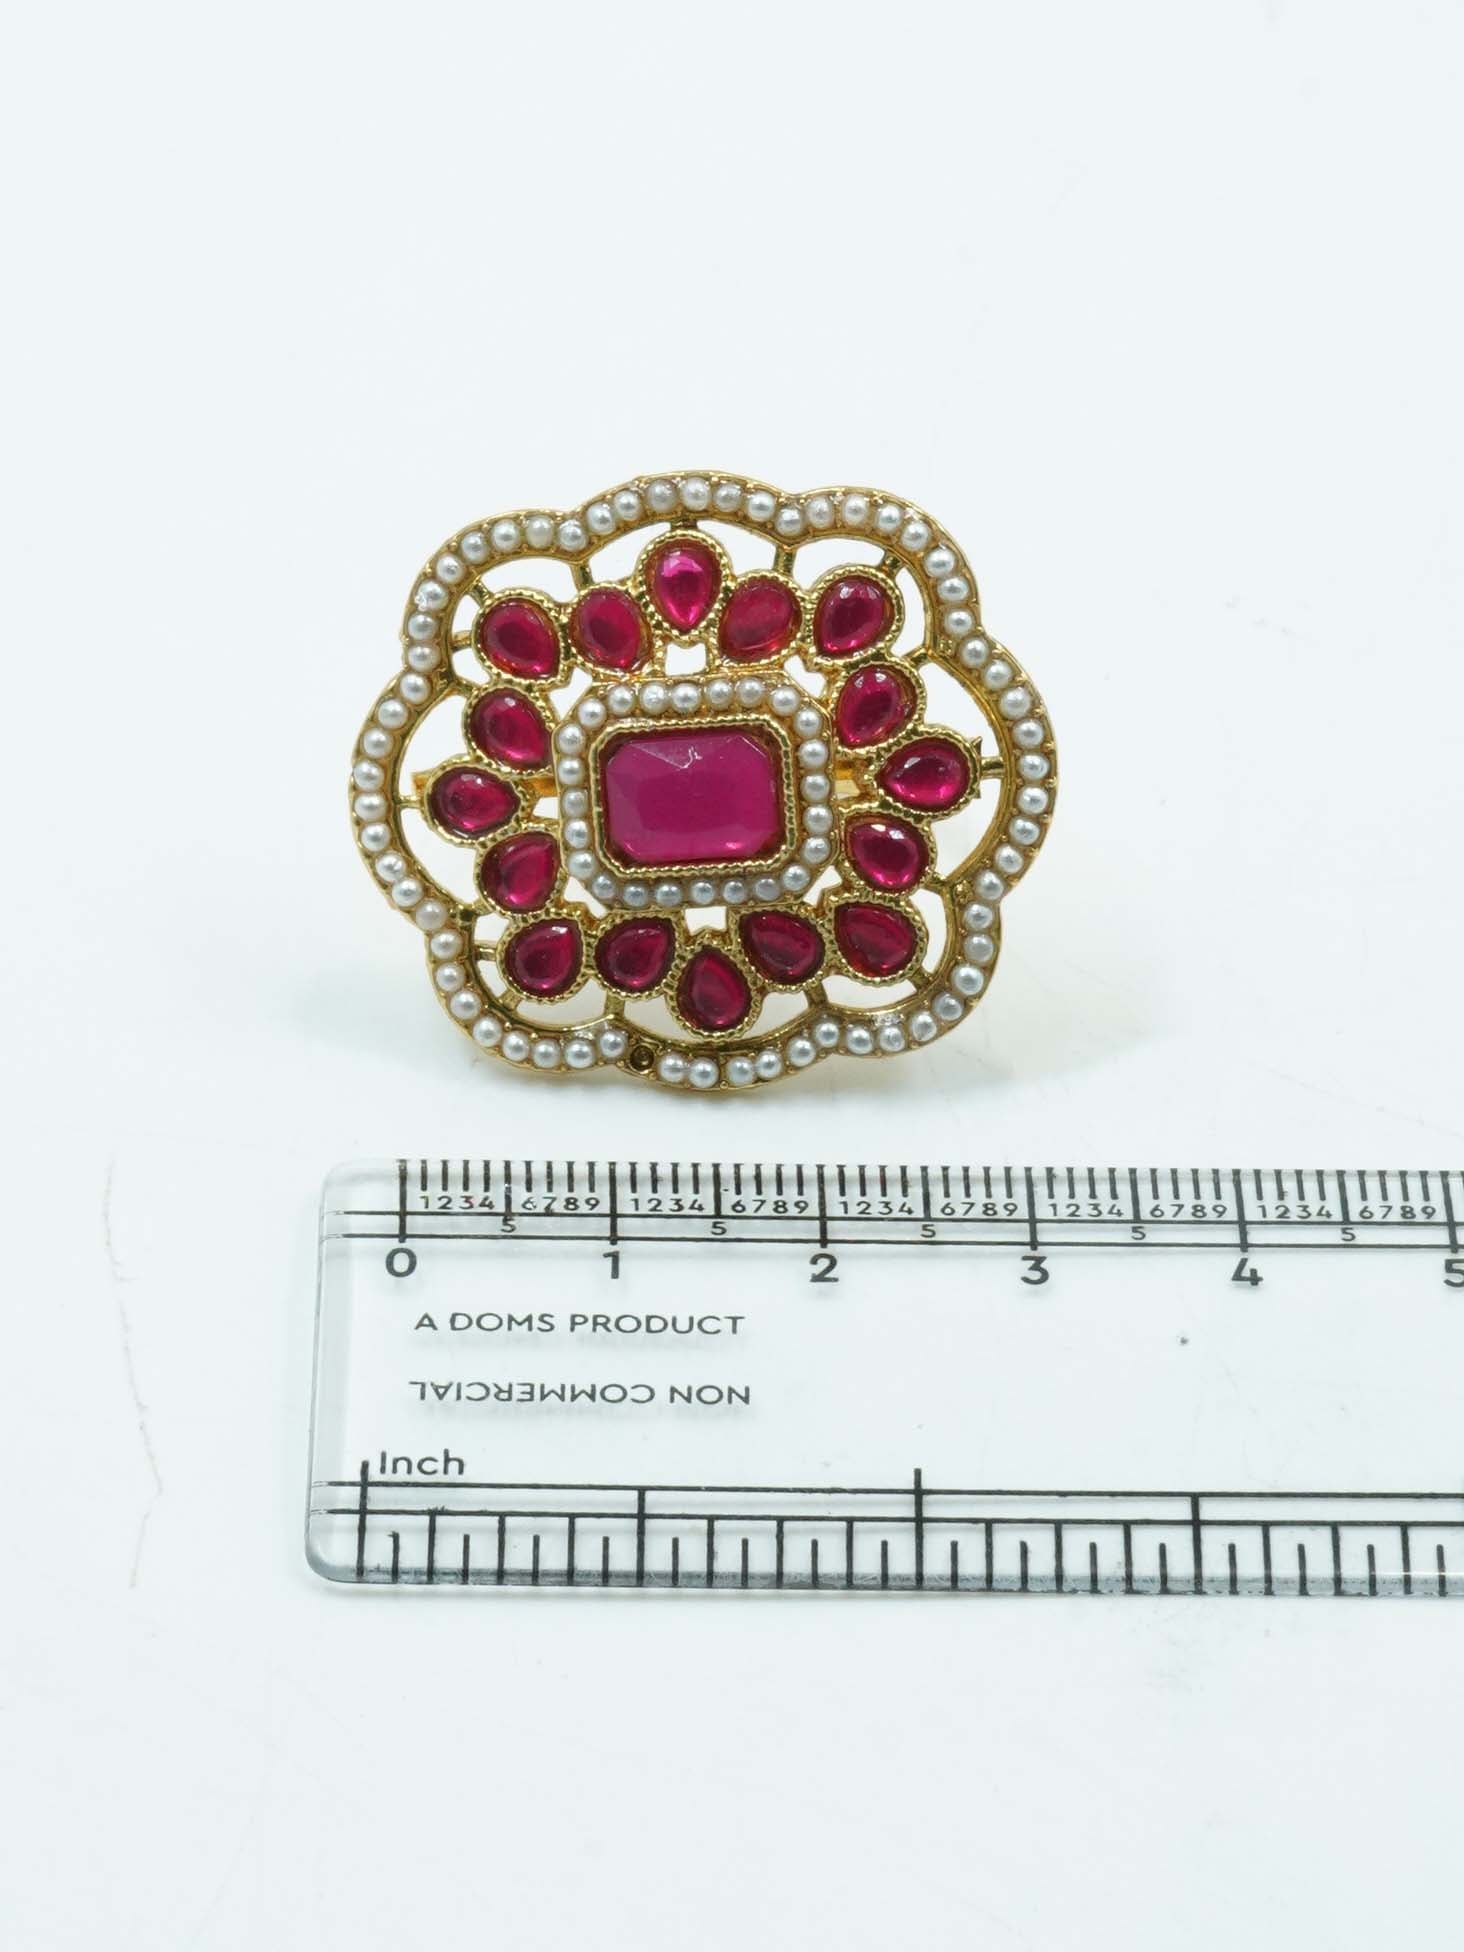 Antique Gold Plated Adjustable Size Designer Finger ring with Stones 10917N